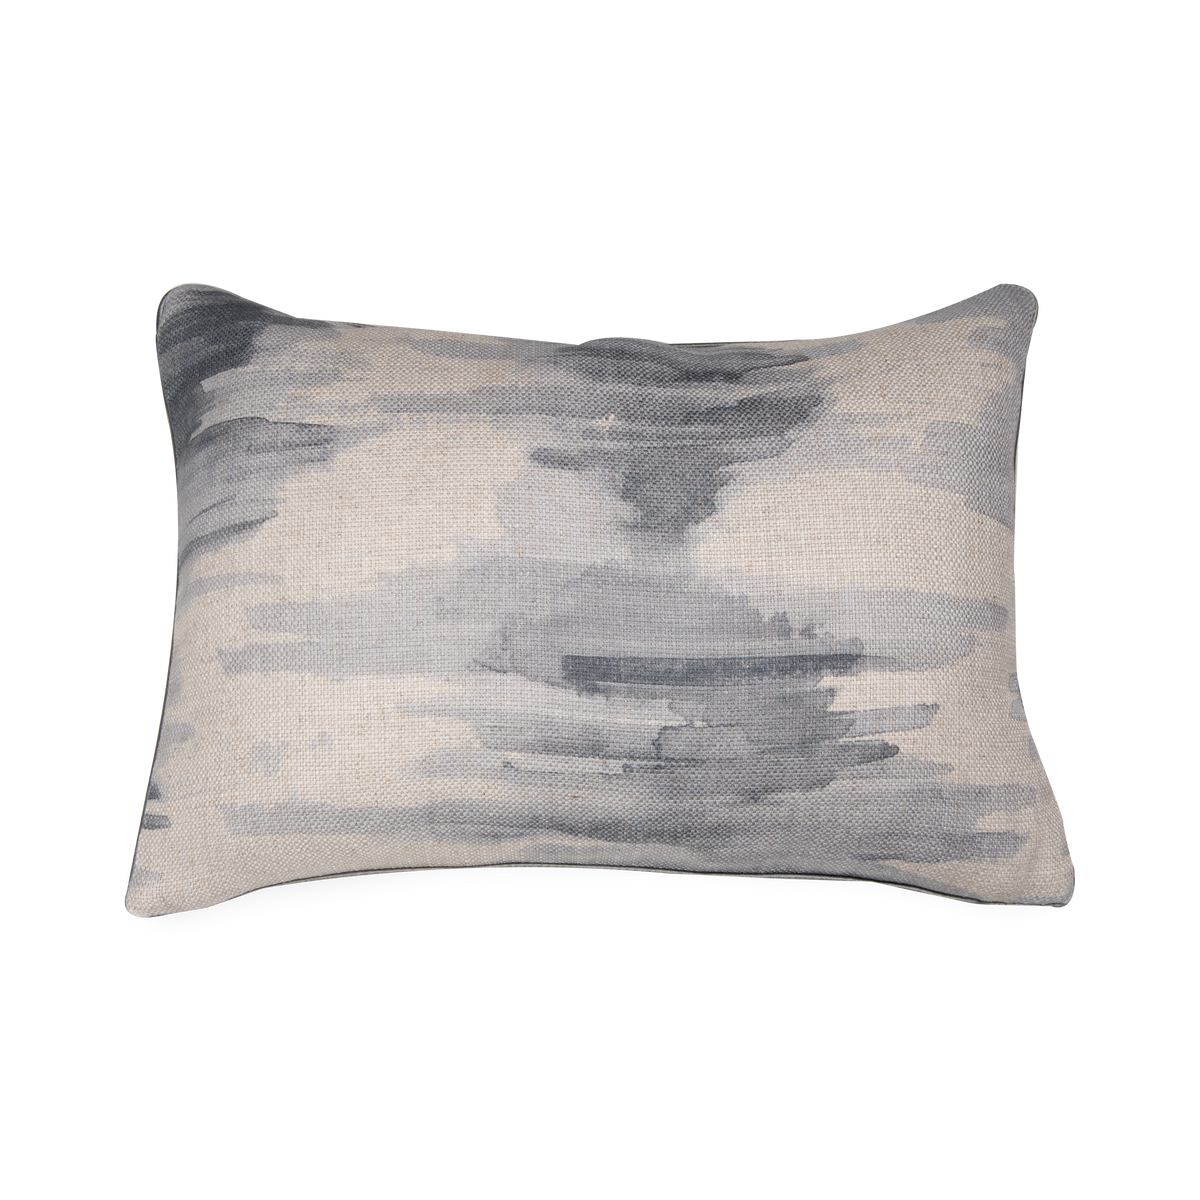 Watermark Pillow